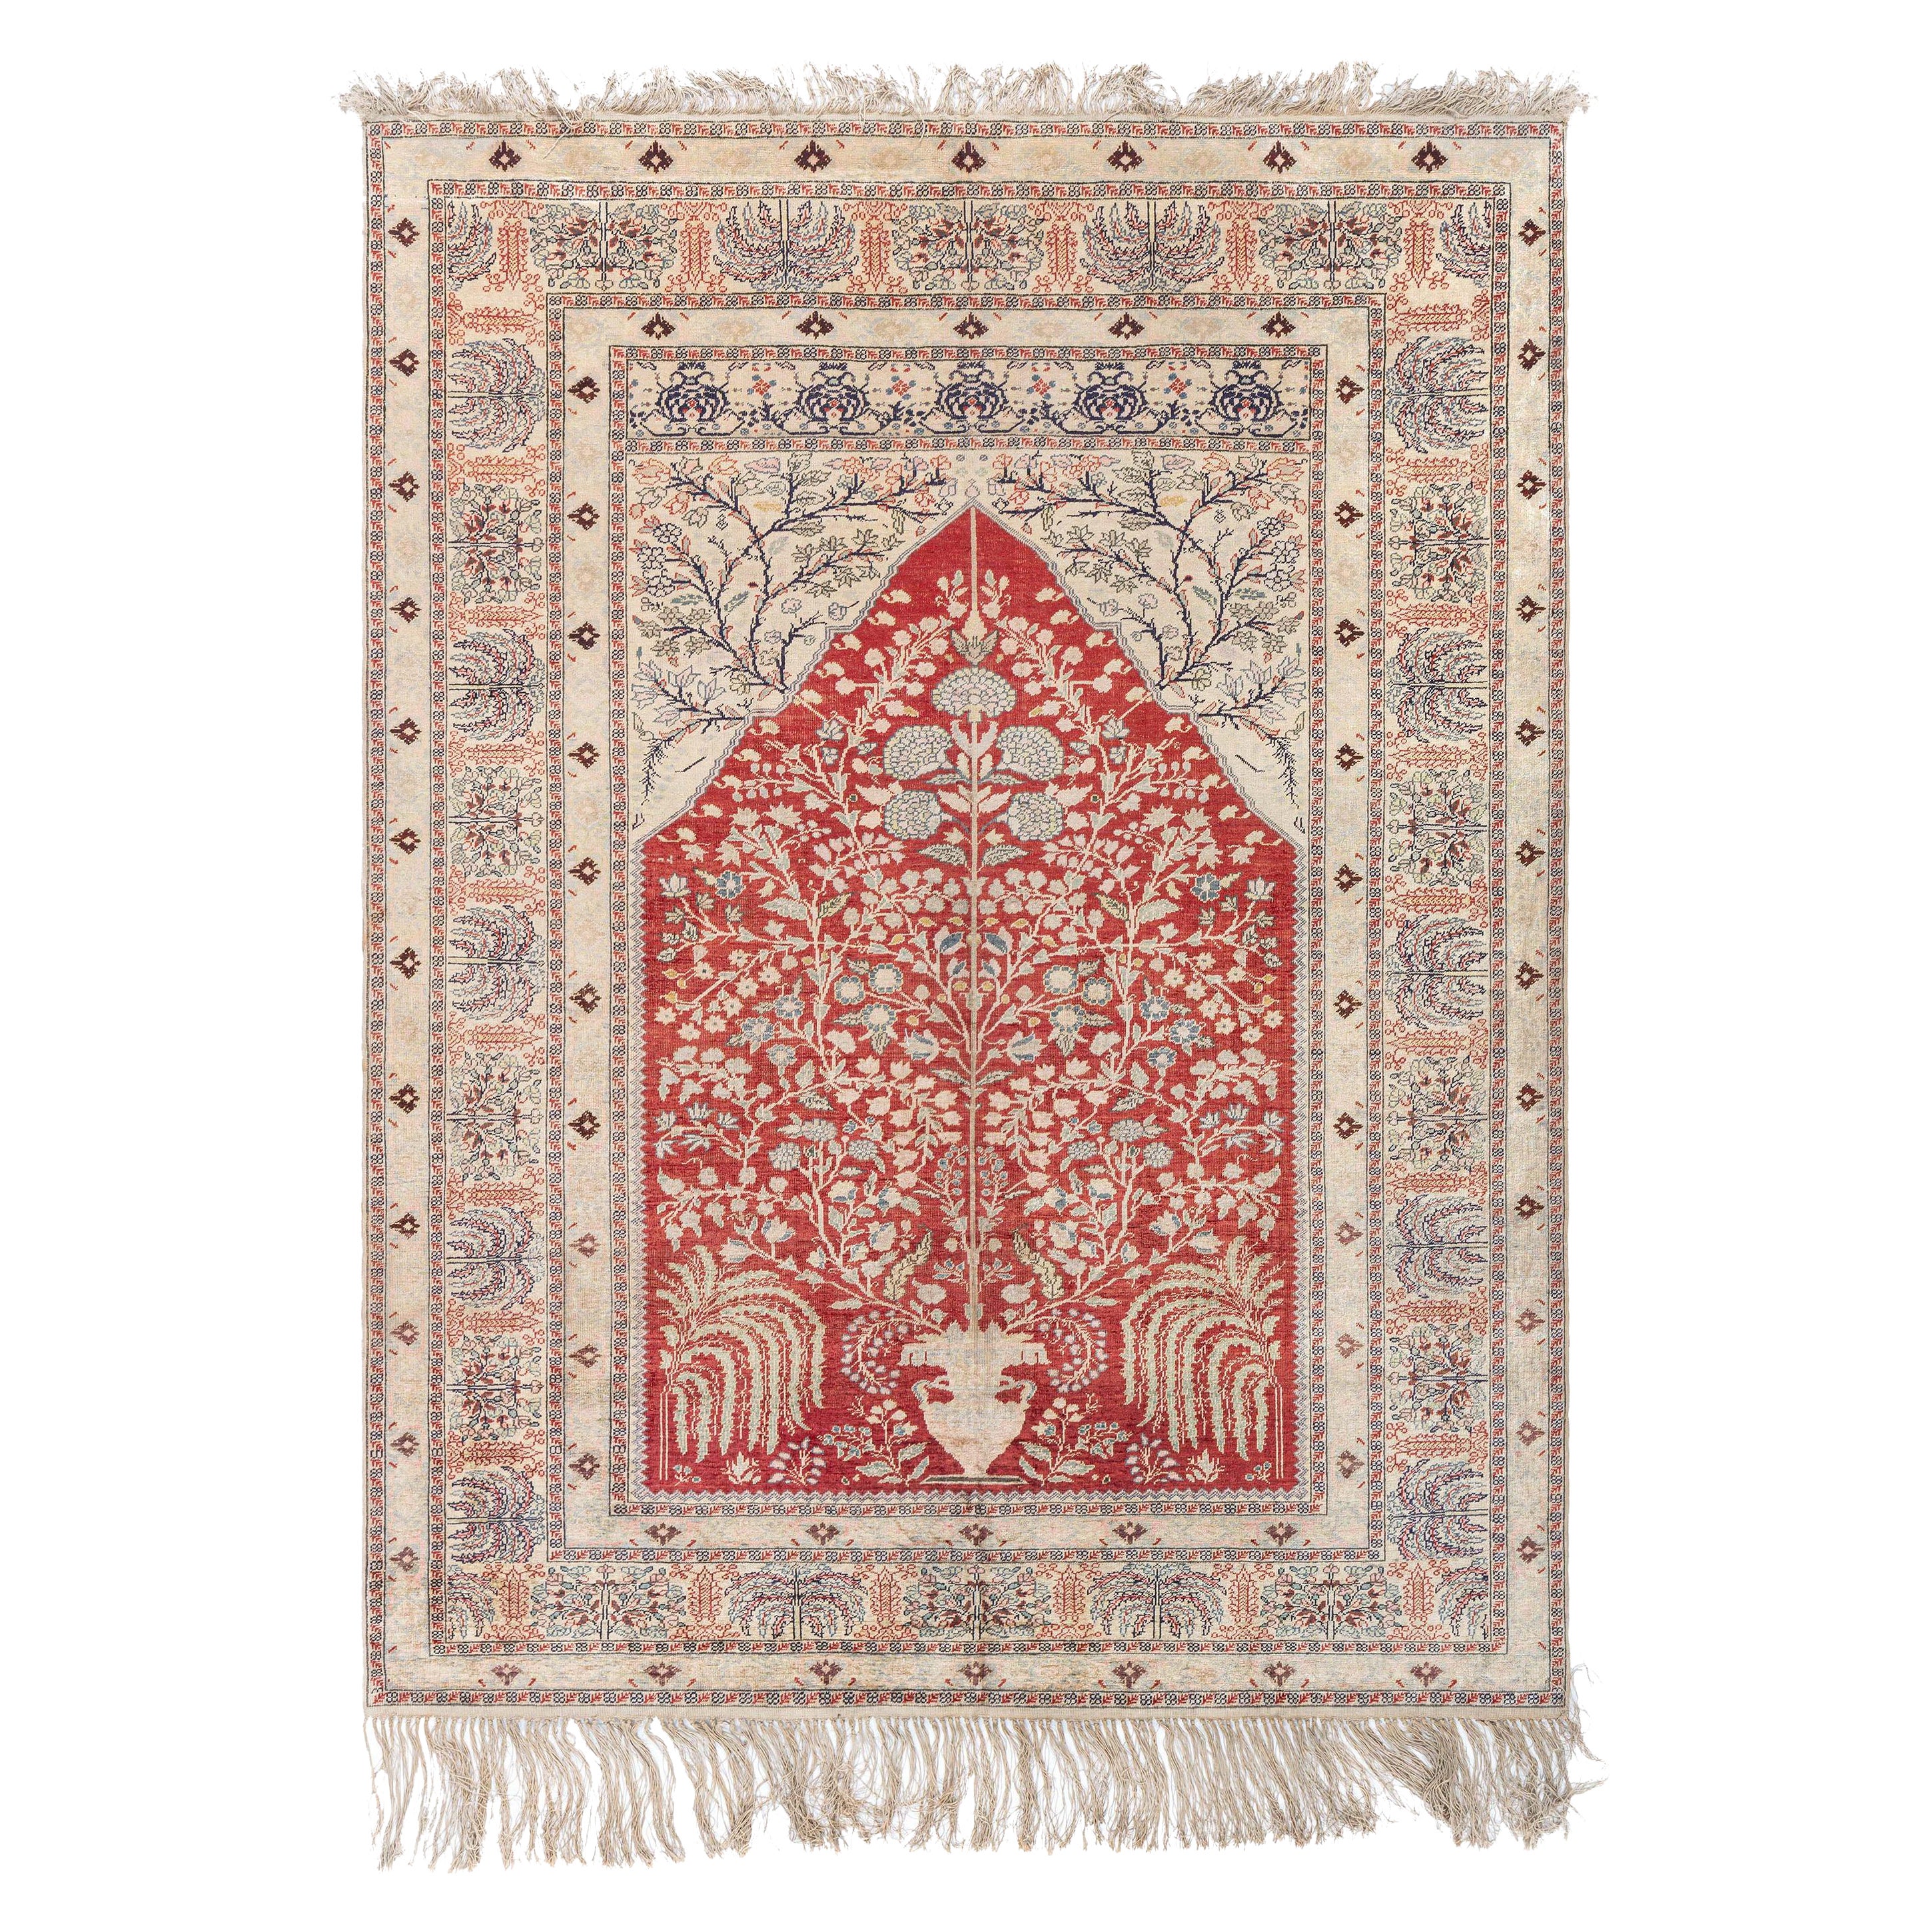 Early 20th Century Turkish Handmade Silk Rug For Sale